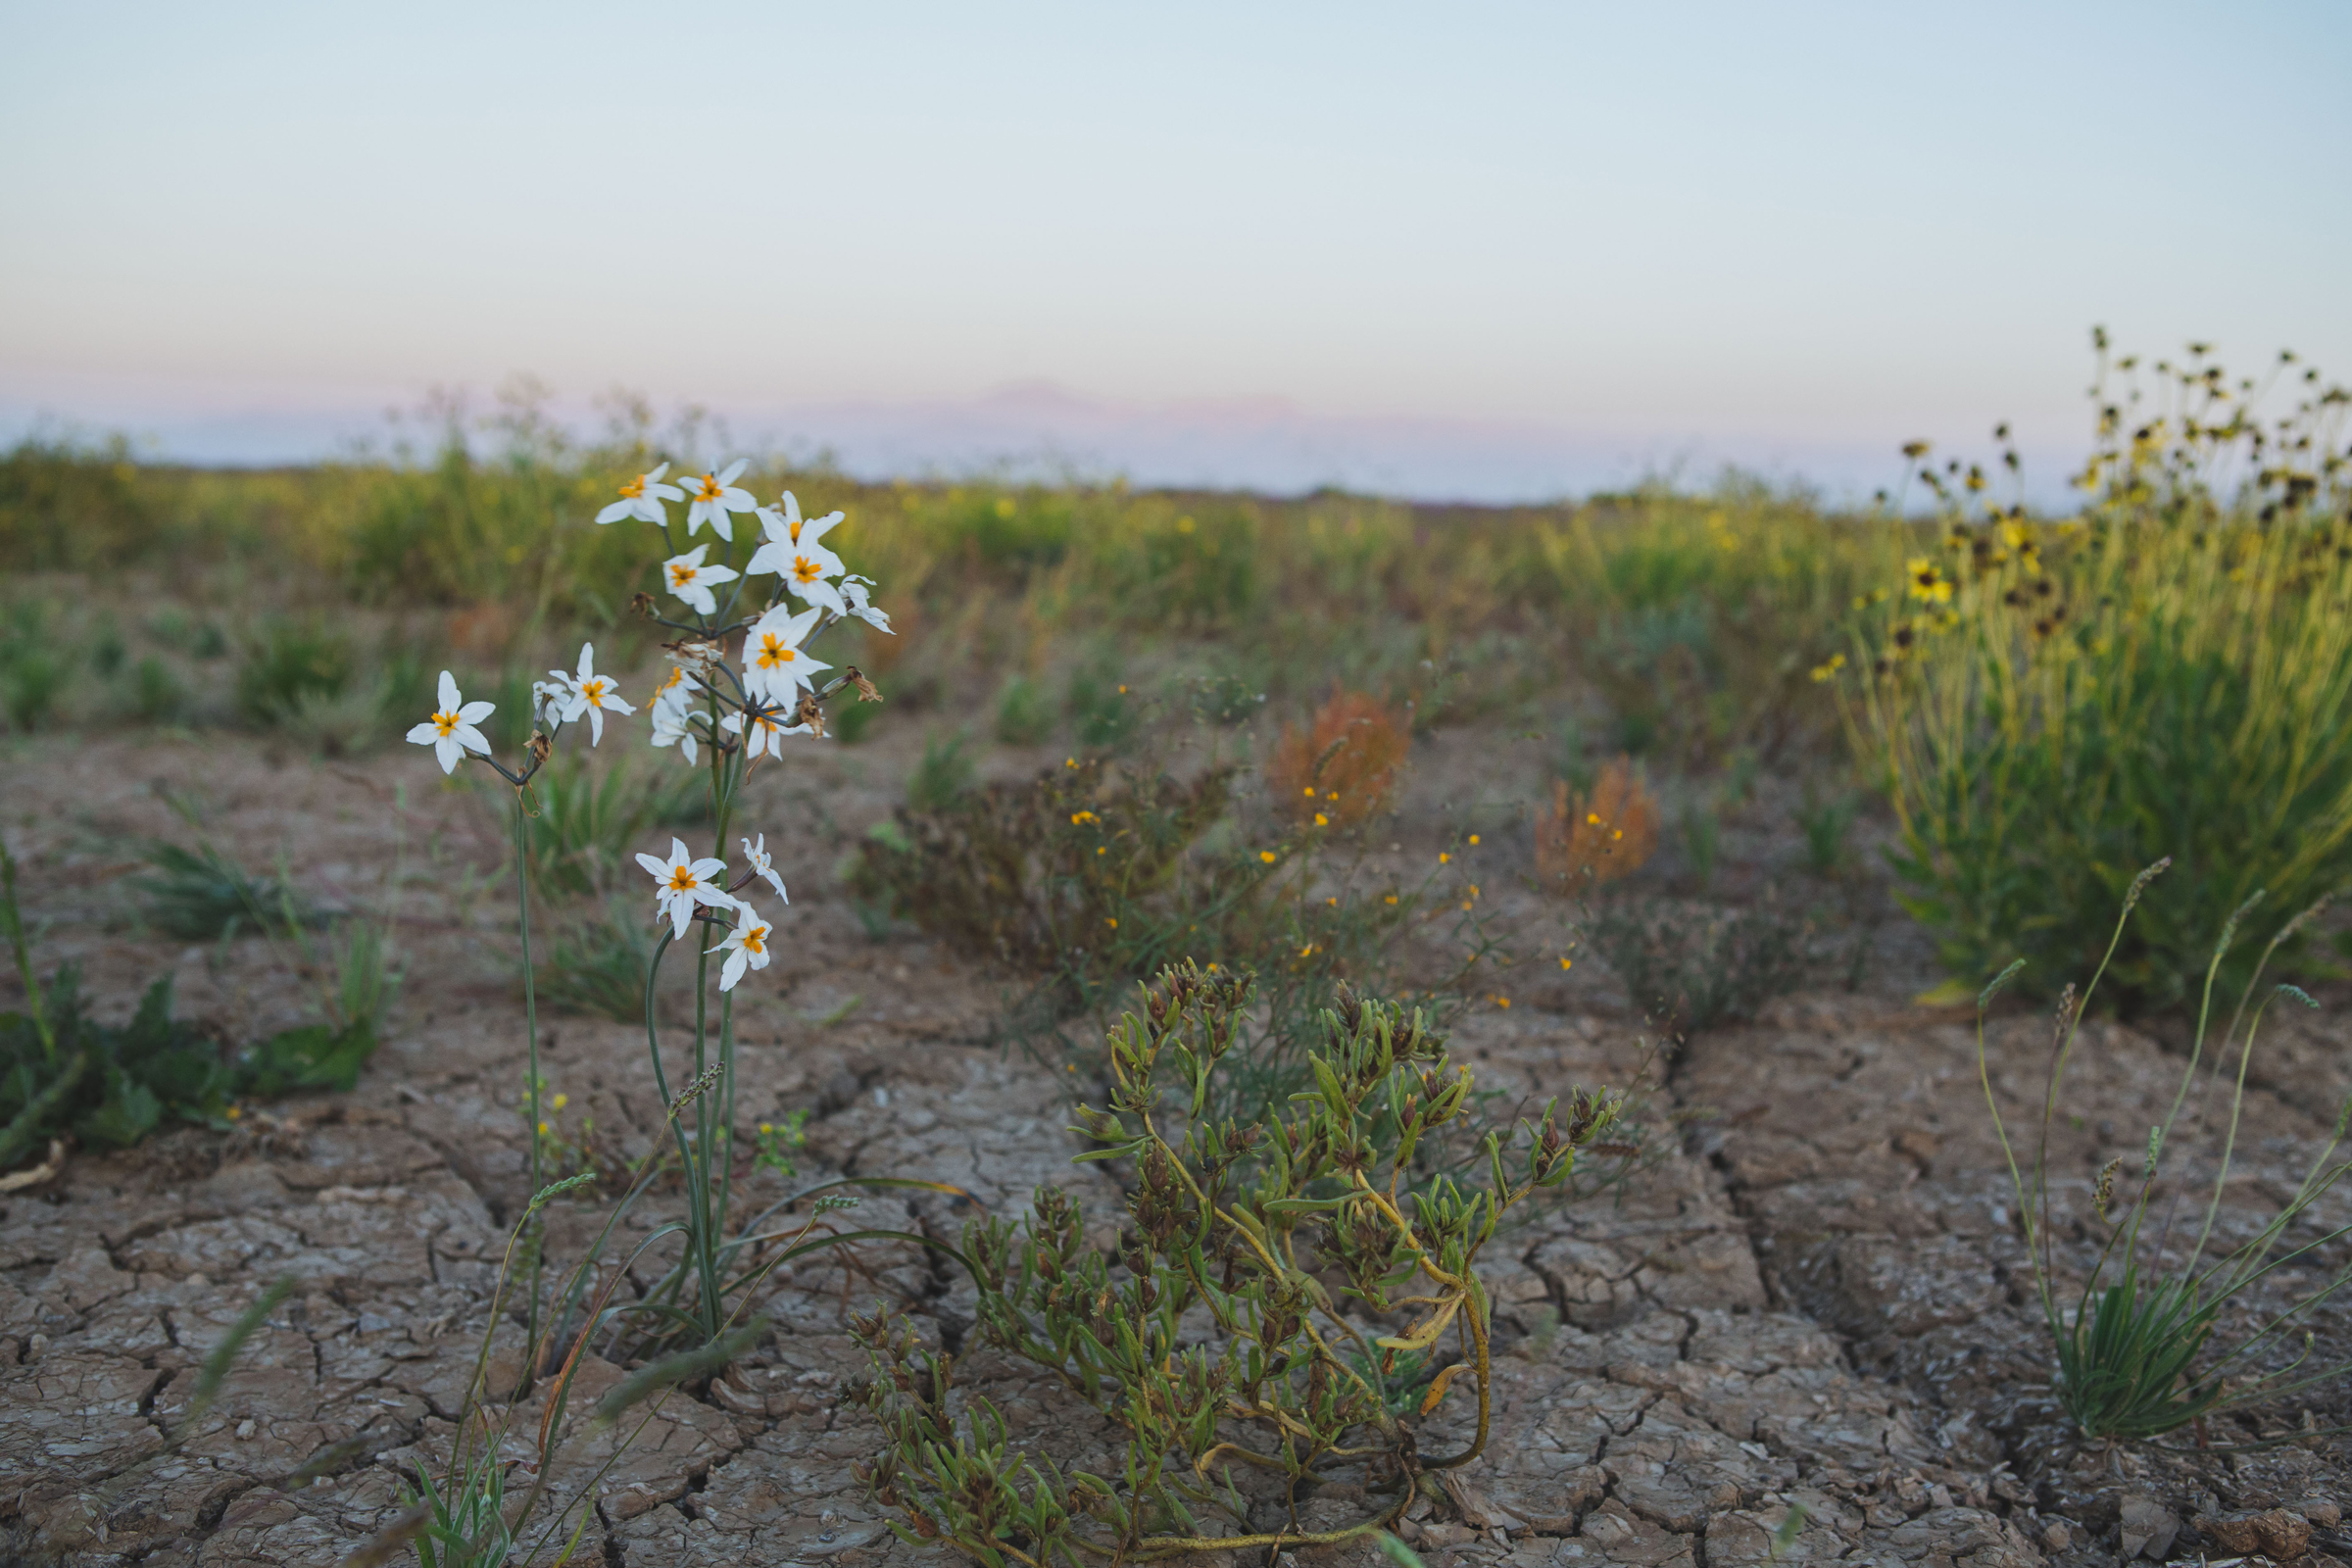 huilli (Leucocoryne appendiculata) en desierto florido 2017. Créditos: ©Amelia Órtuzar